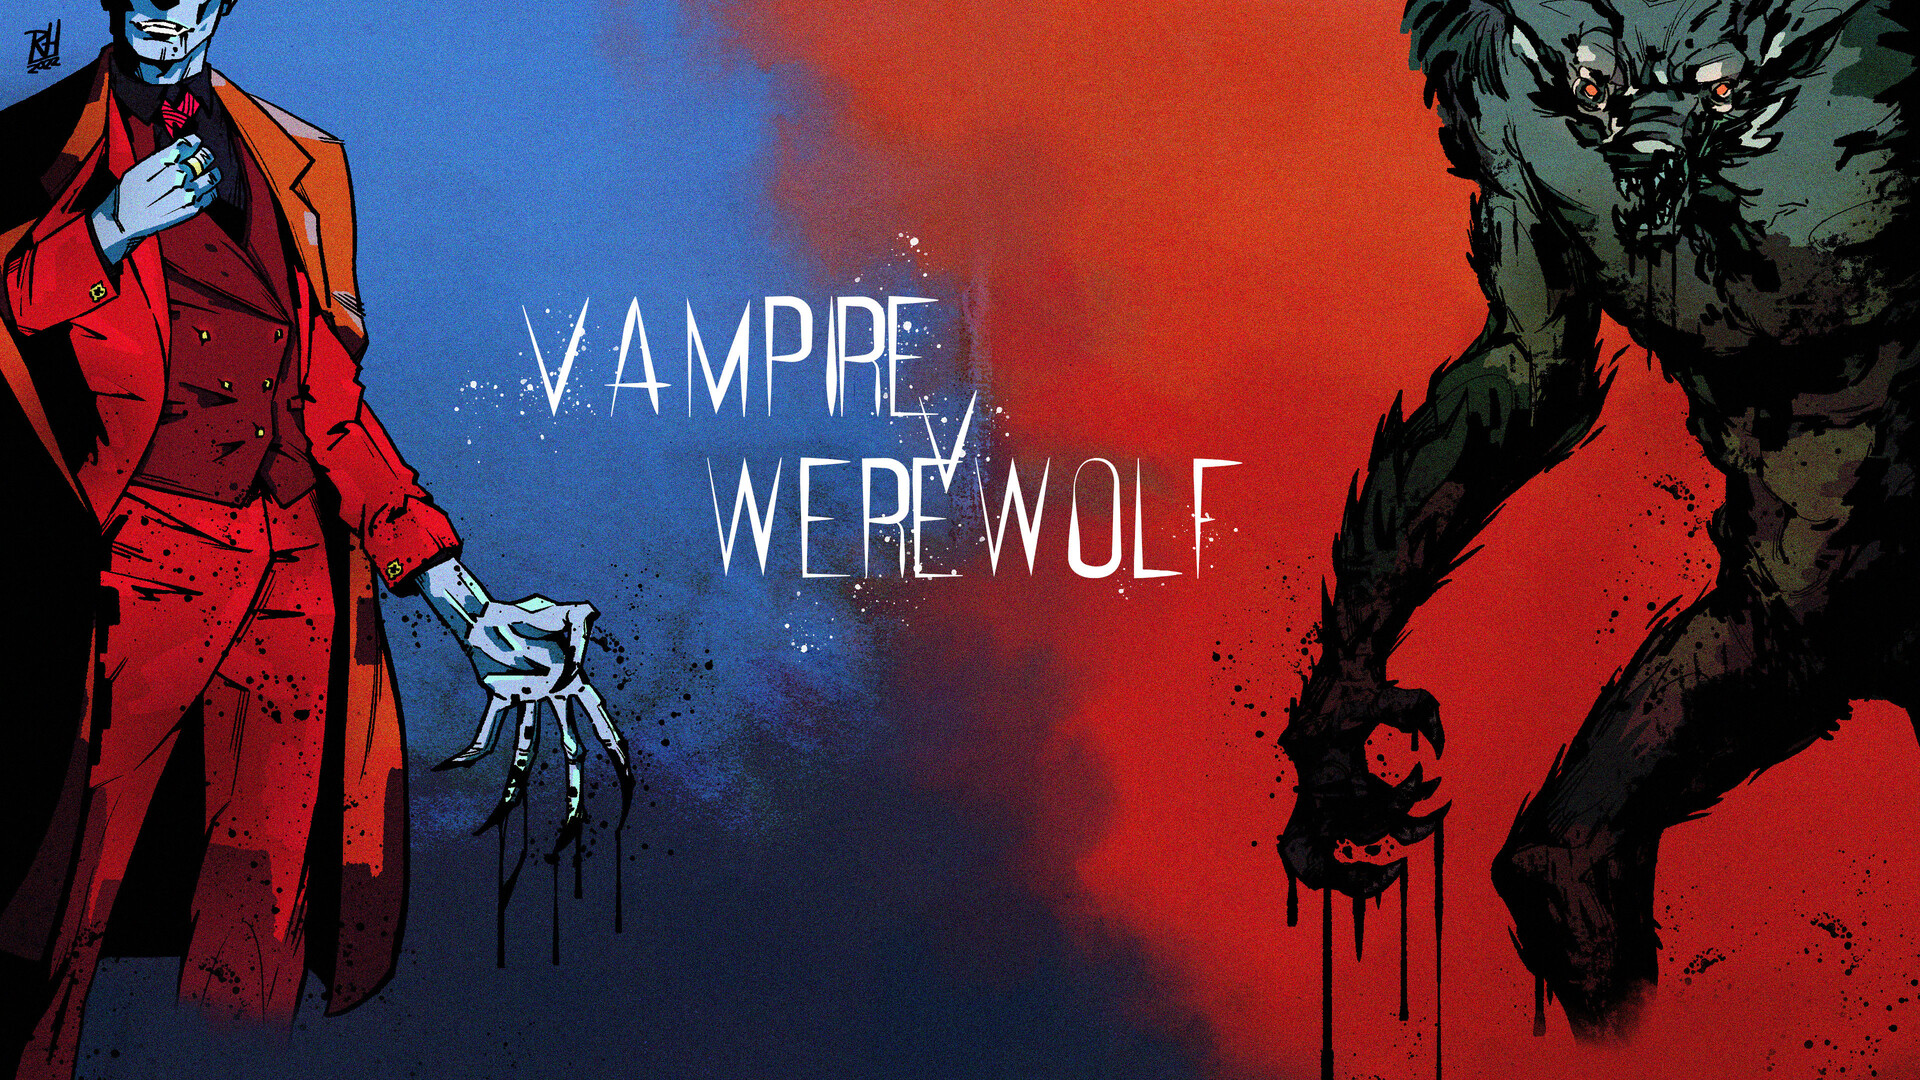 ArtStation - Werewolf By Night - Poster Art